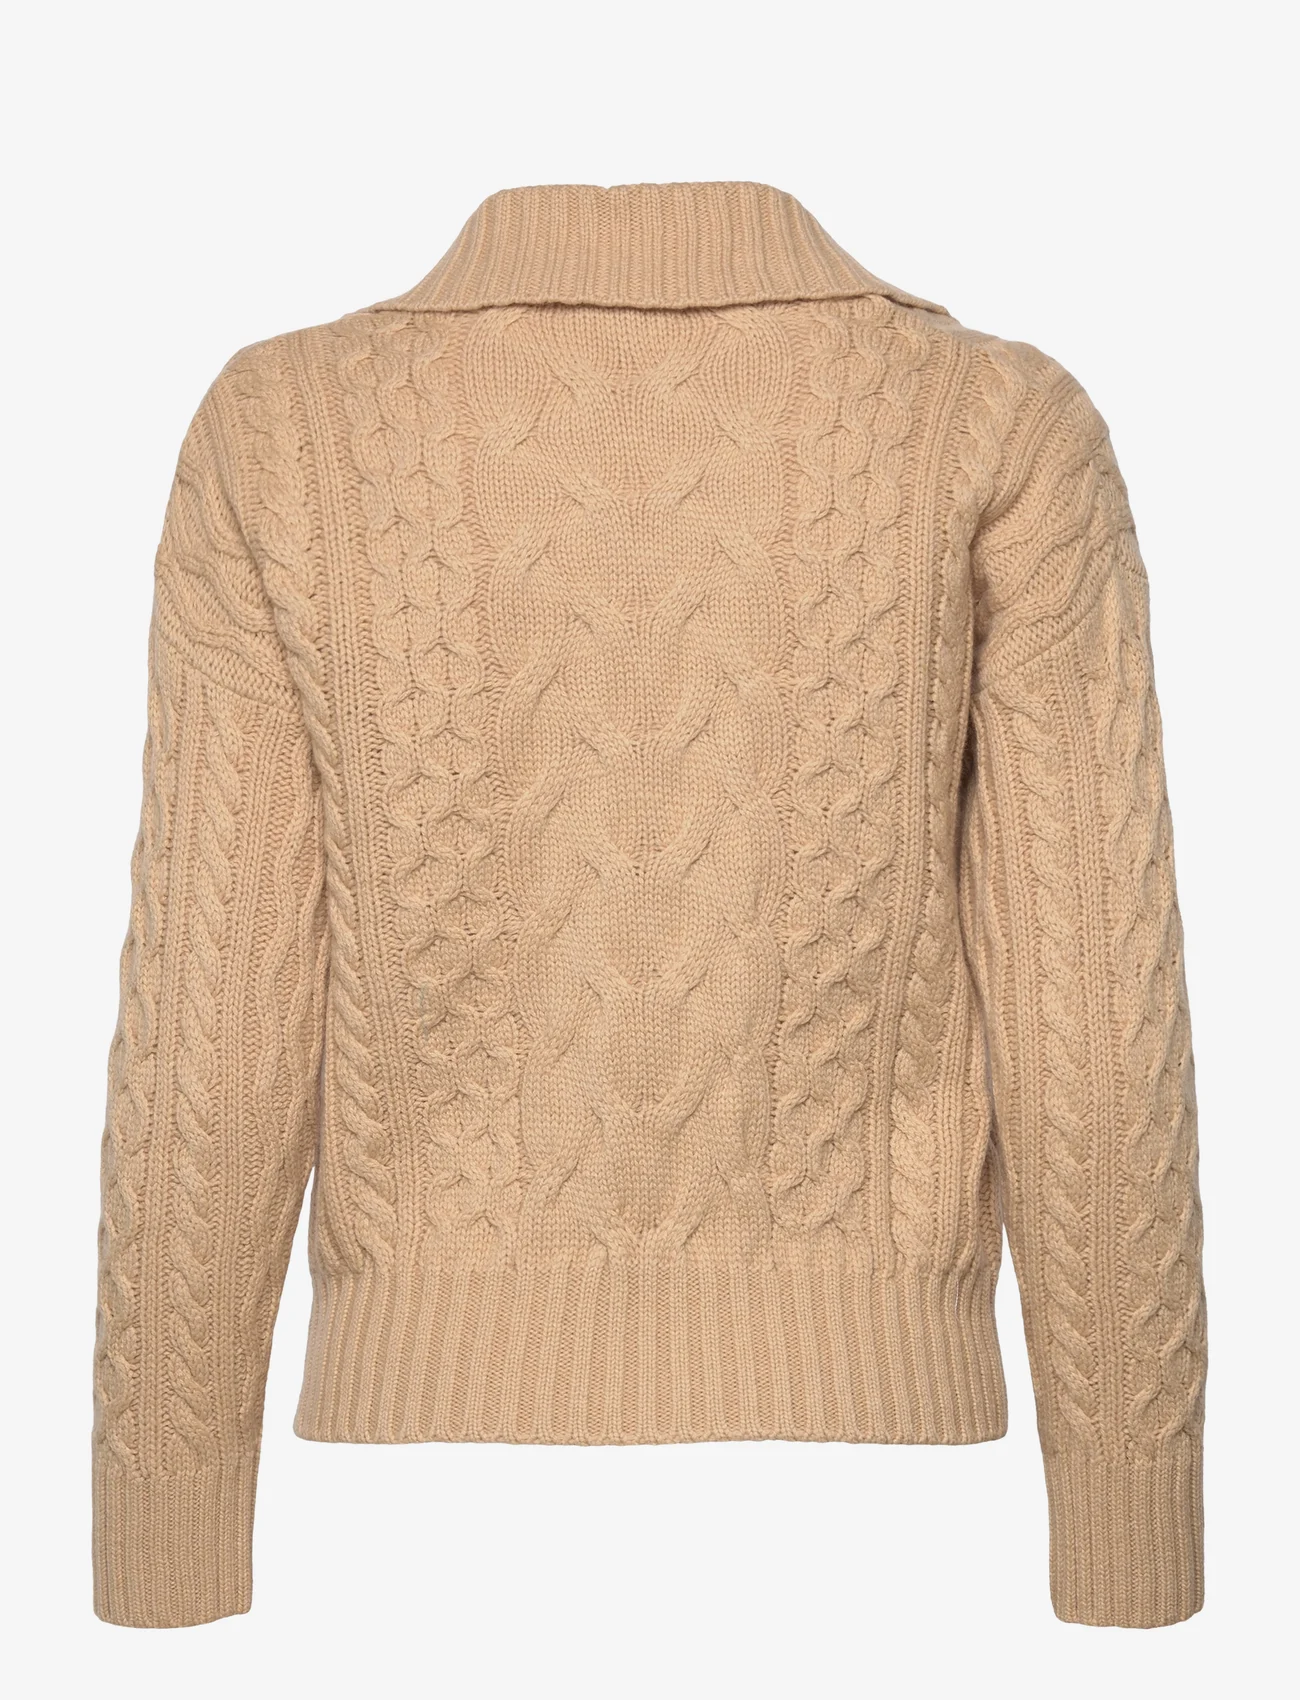 Andiata - Valerie knit - tröjor - croissant - 1